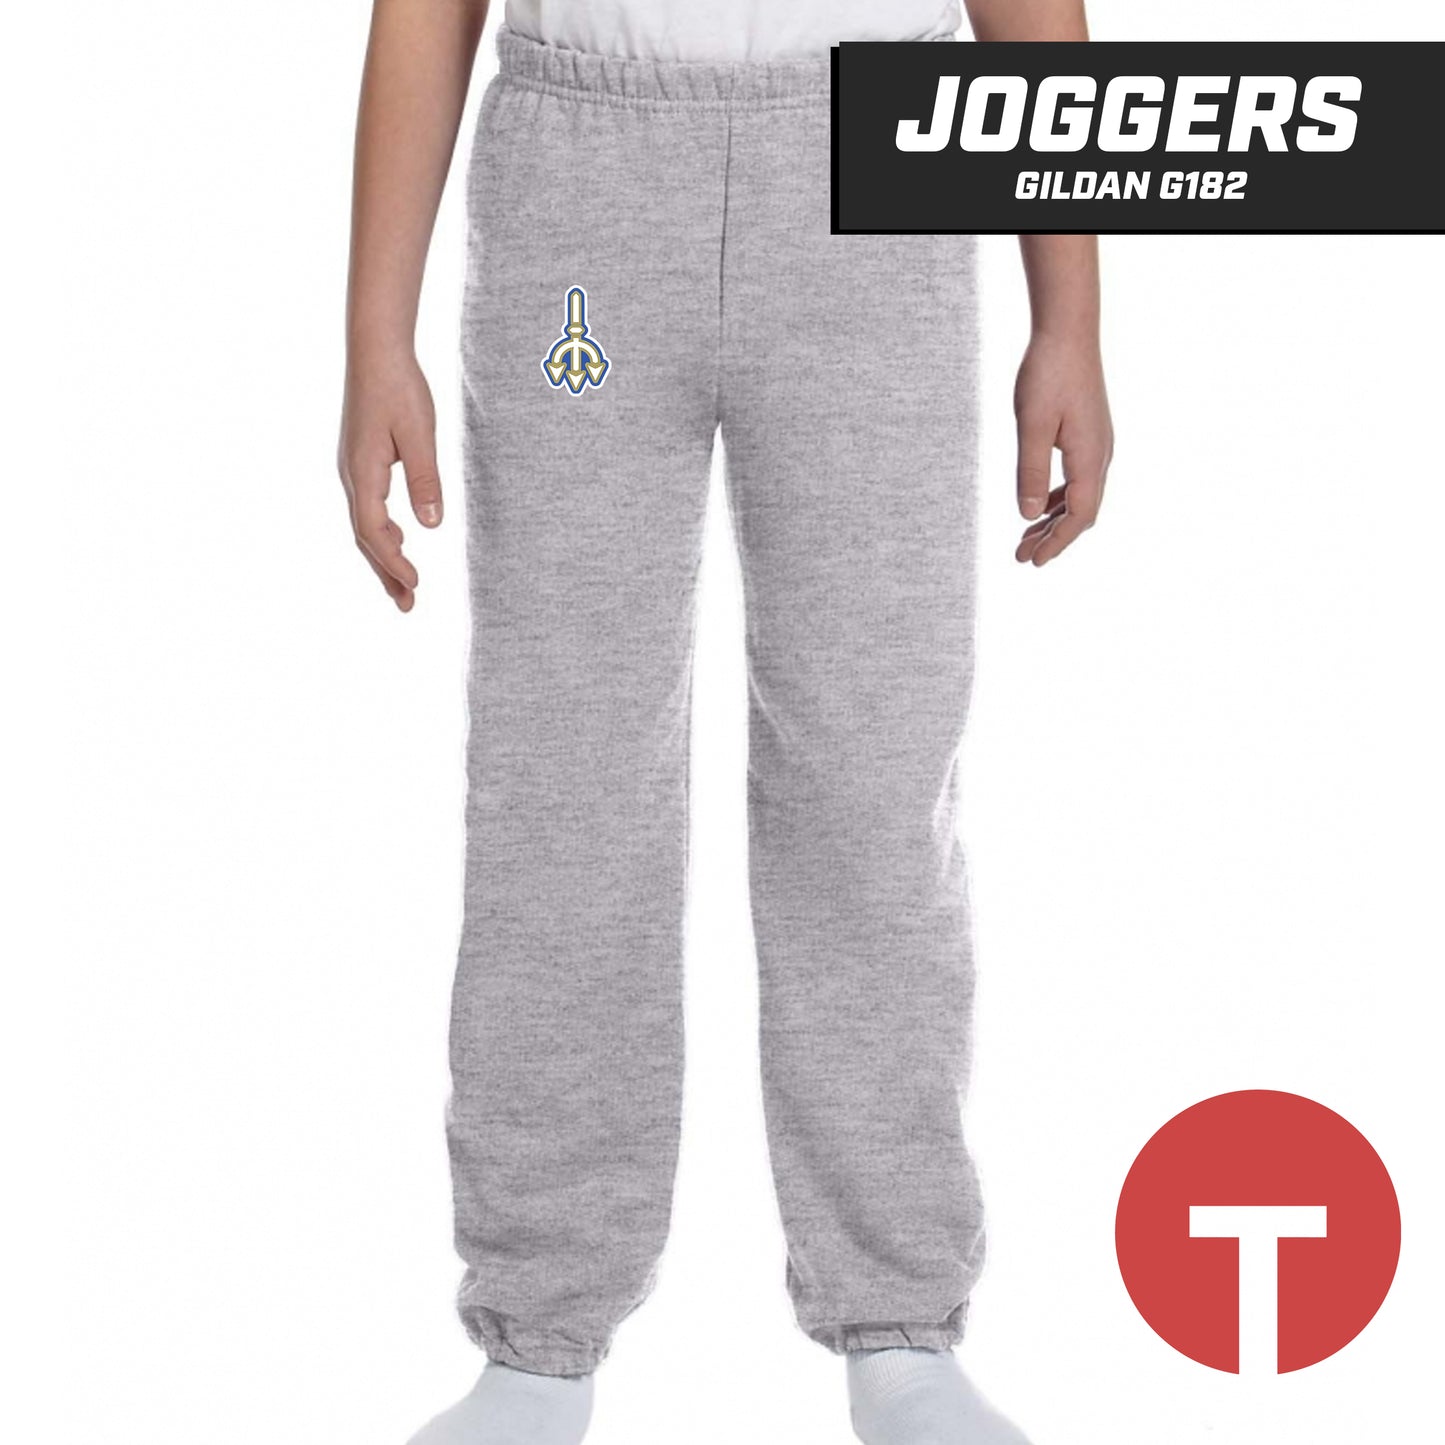 Machias American Legion - Jogger pants Gildan G182